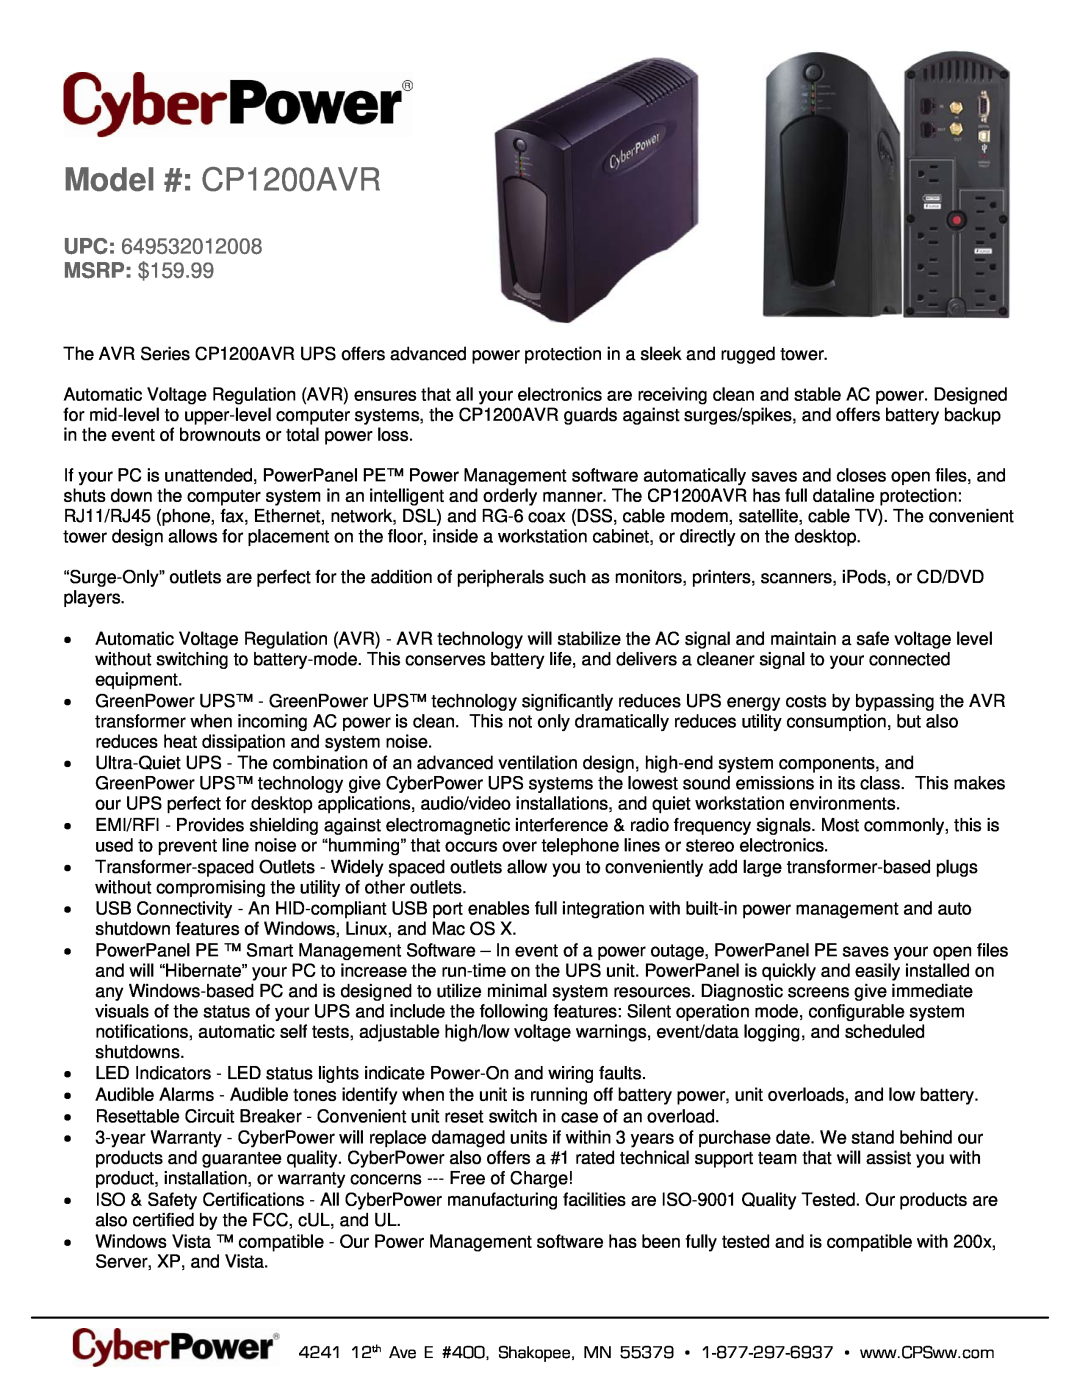 CyberPower Systems 649532012008 warranty Model # CP1200AVR, UPC MSRP $159.99 